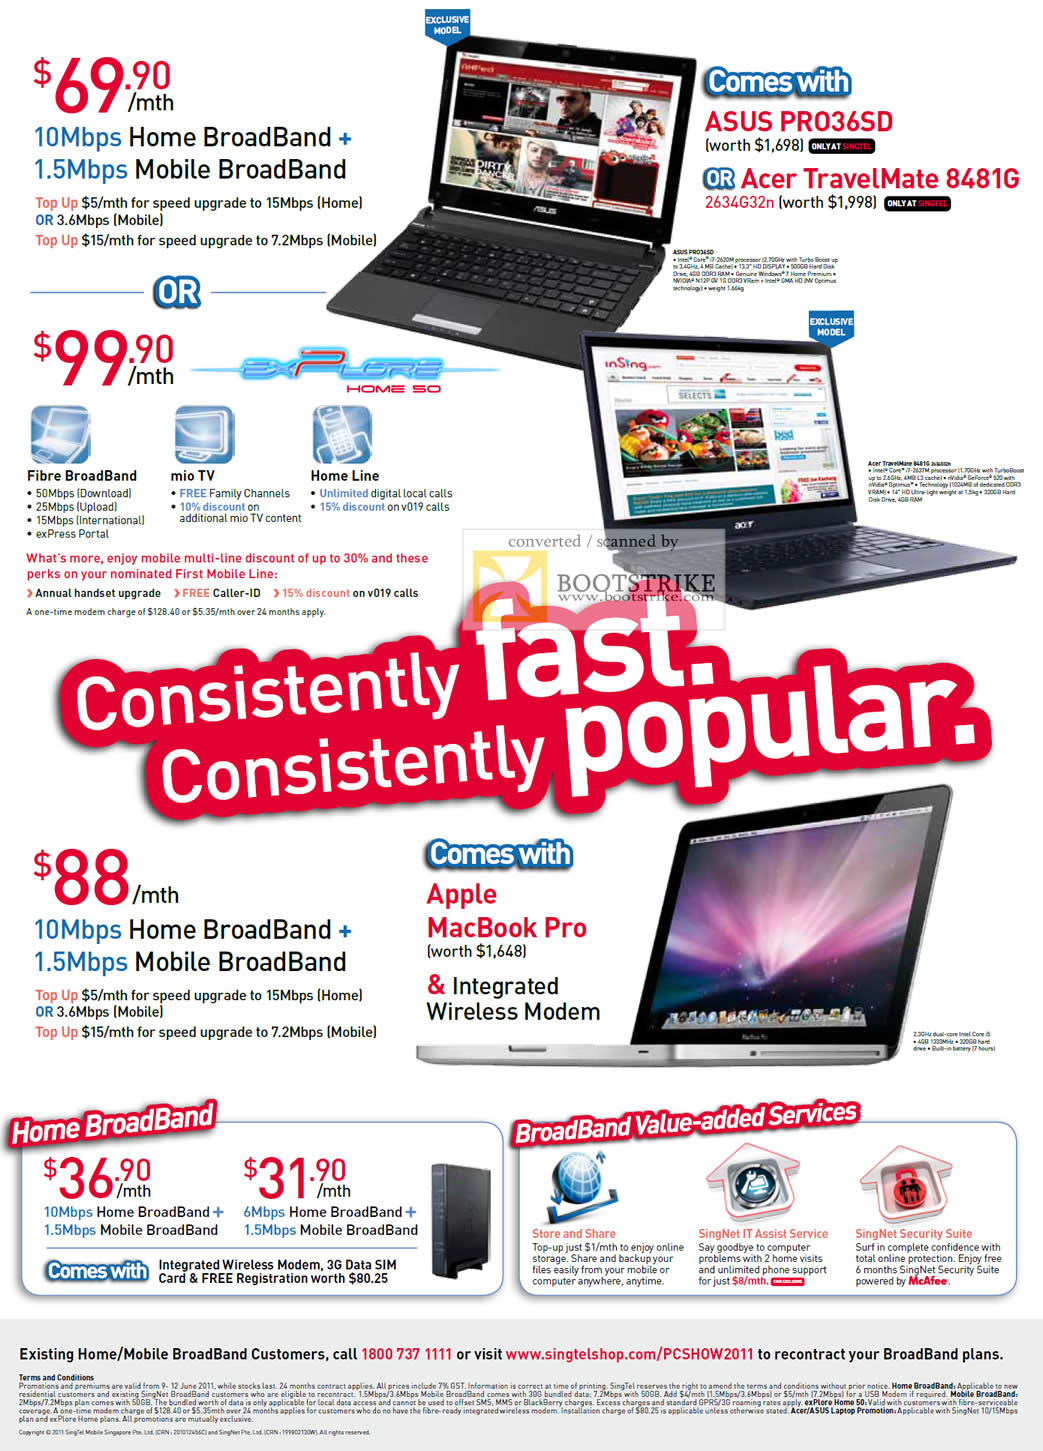 PC Show 2011 price list image brochure of Singtel Broadband Free ASUS Pro36SD Acer TravelMate 8481G 10Mbps 1.5Mbps Fibre Mio TV Home Line Mobile Apple MacBook Pro